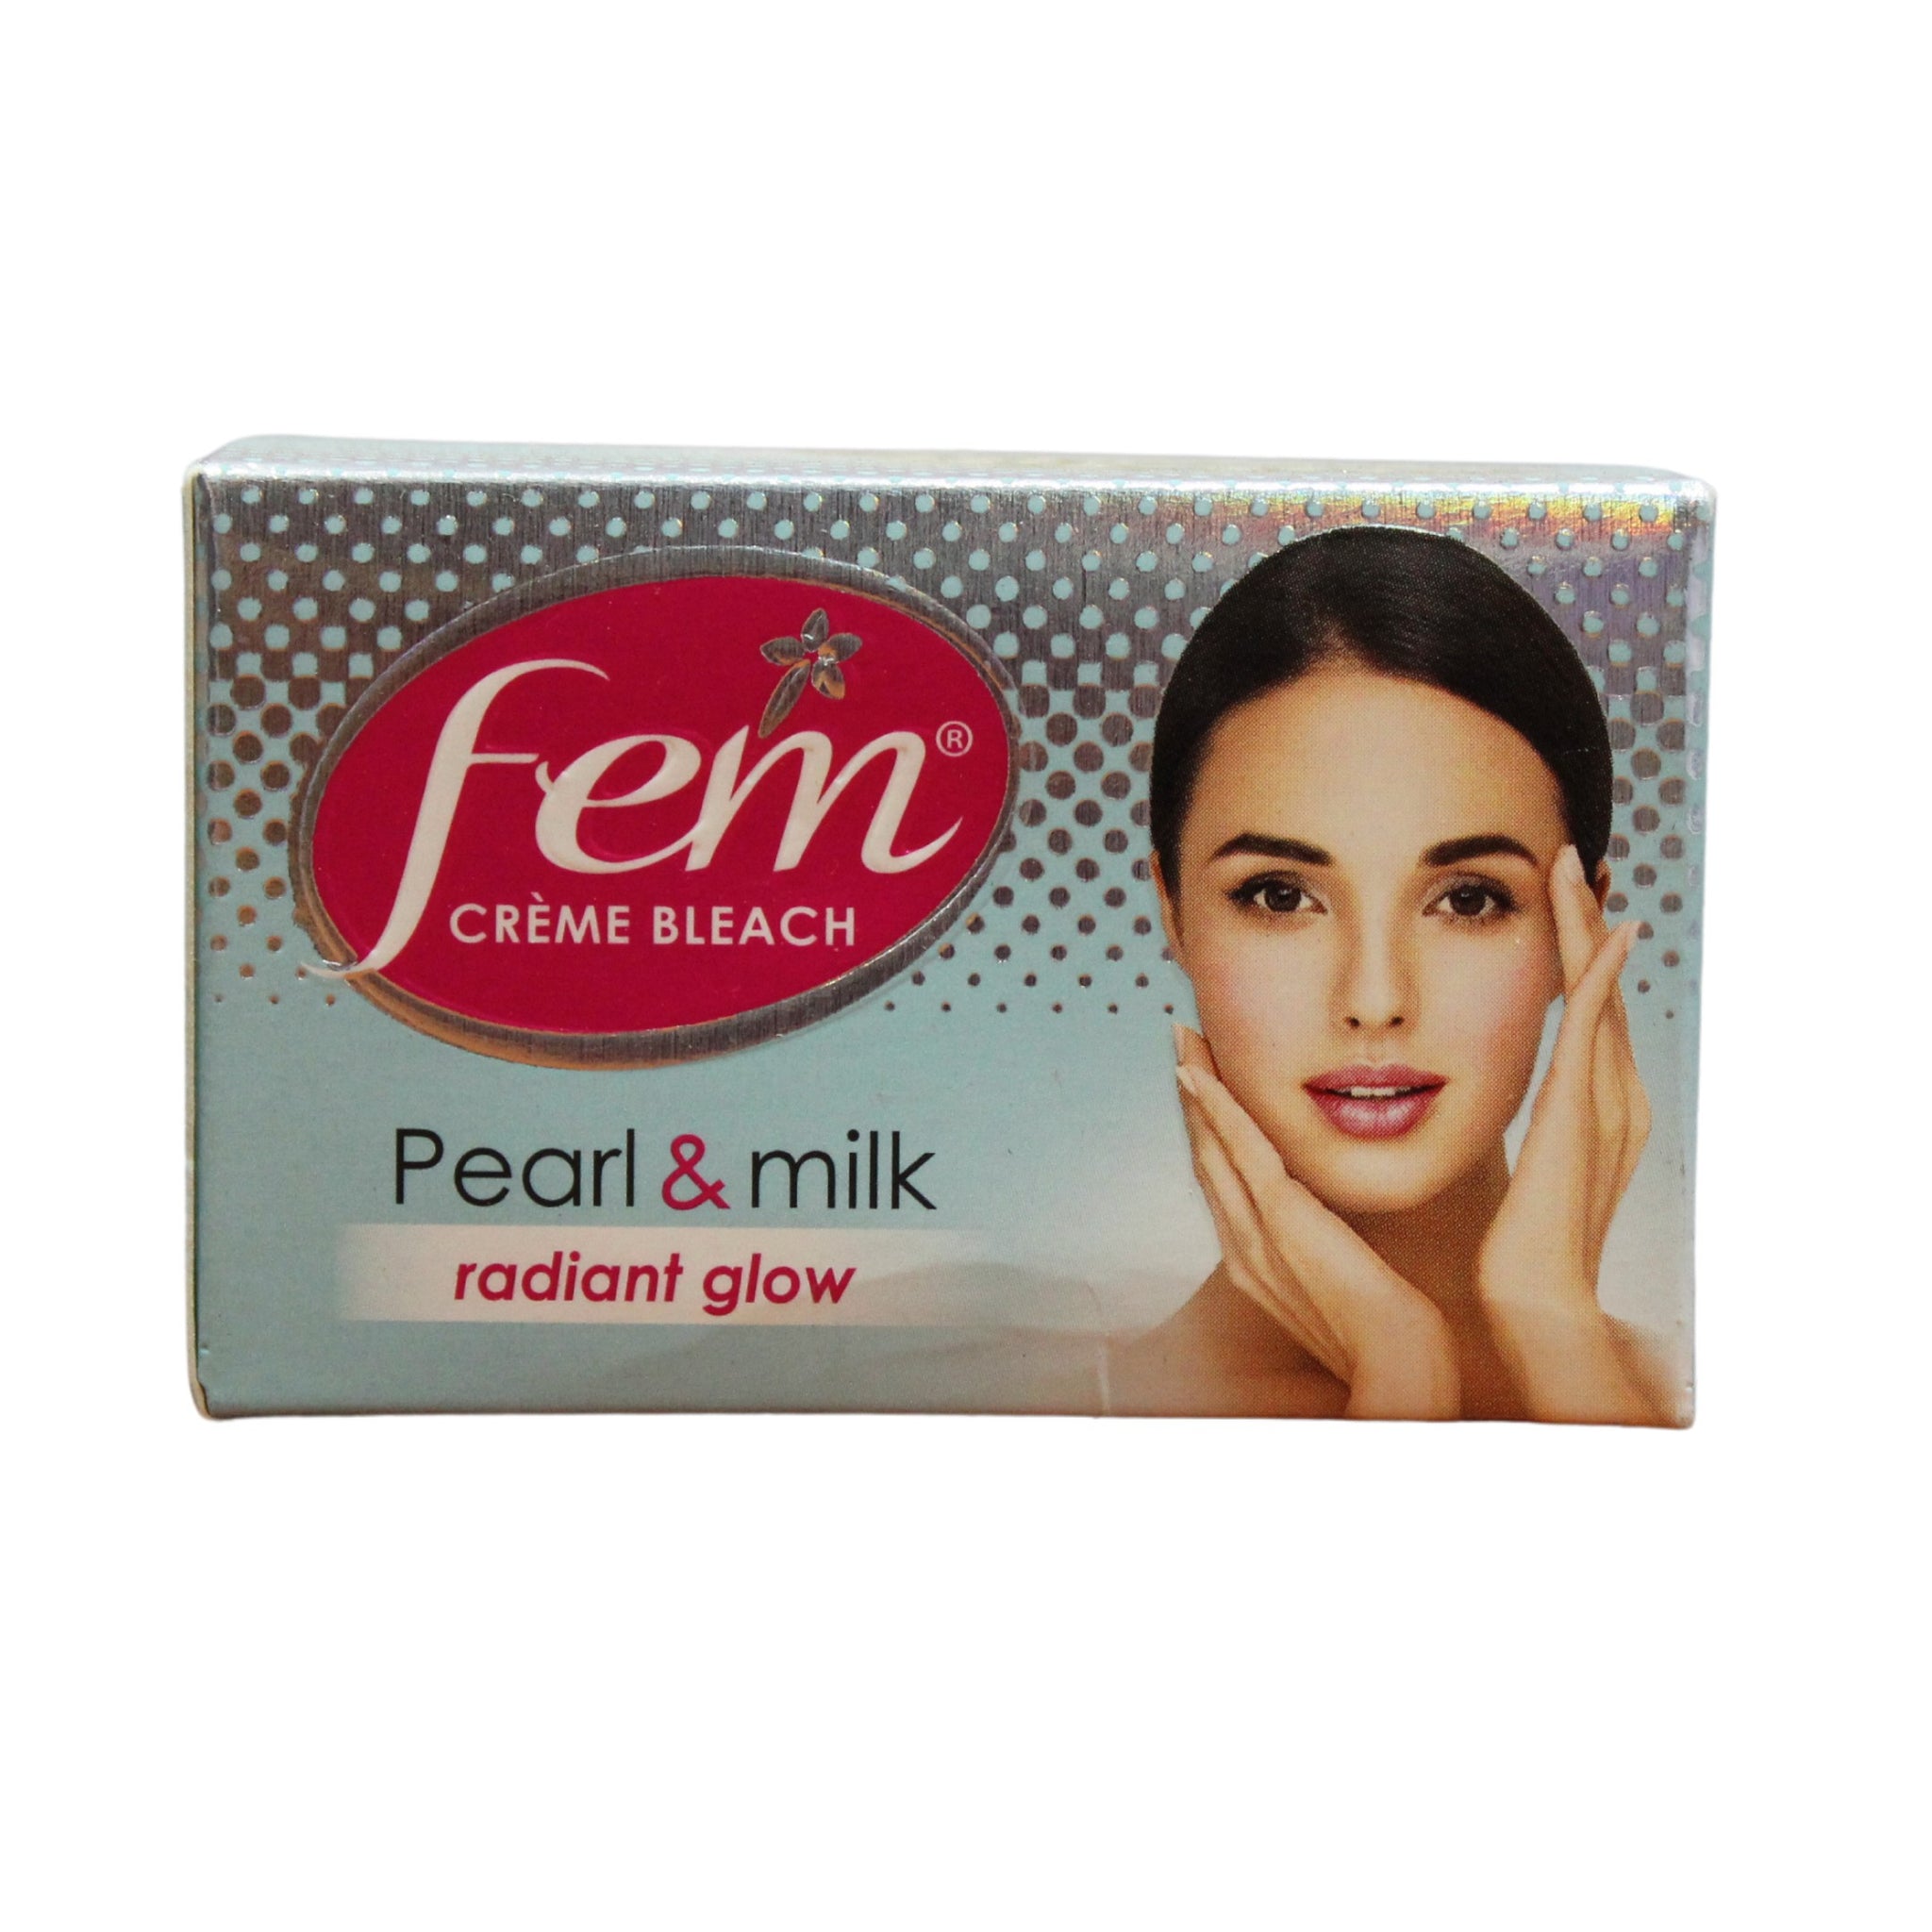 Fem creme bleach - Pearl and milk - 24gm Dabur